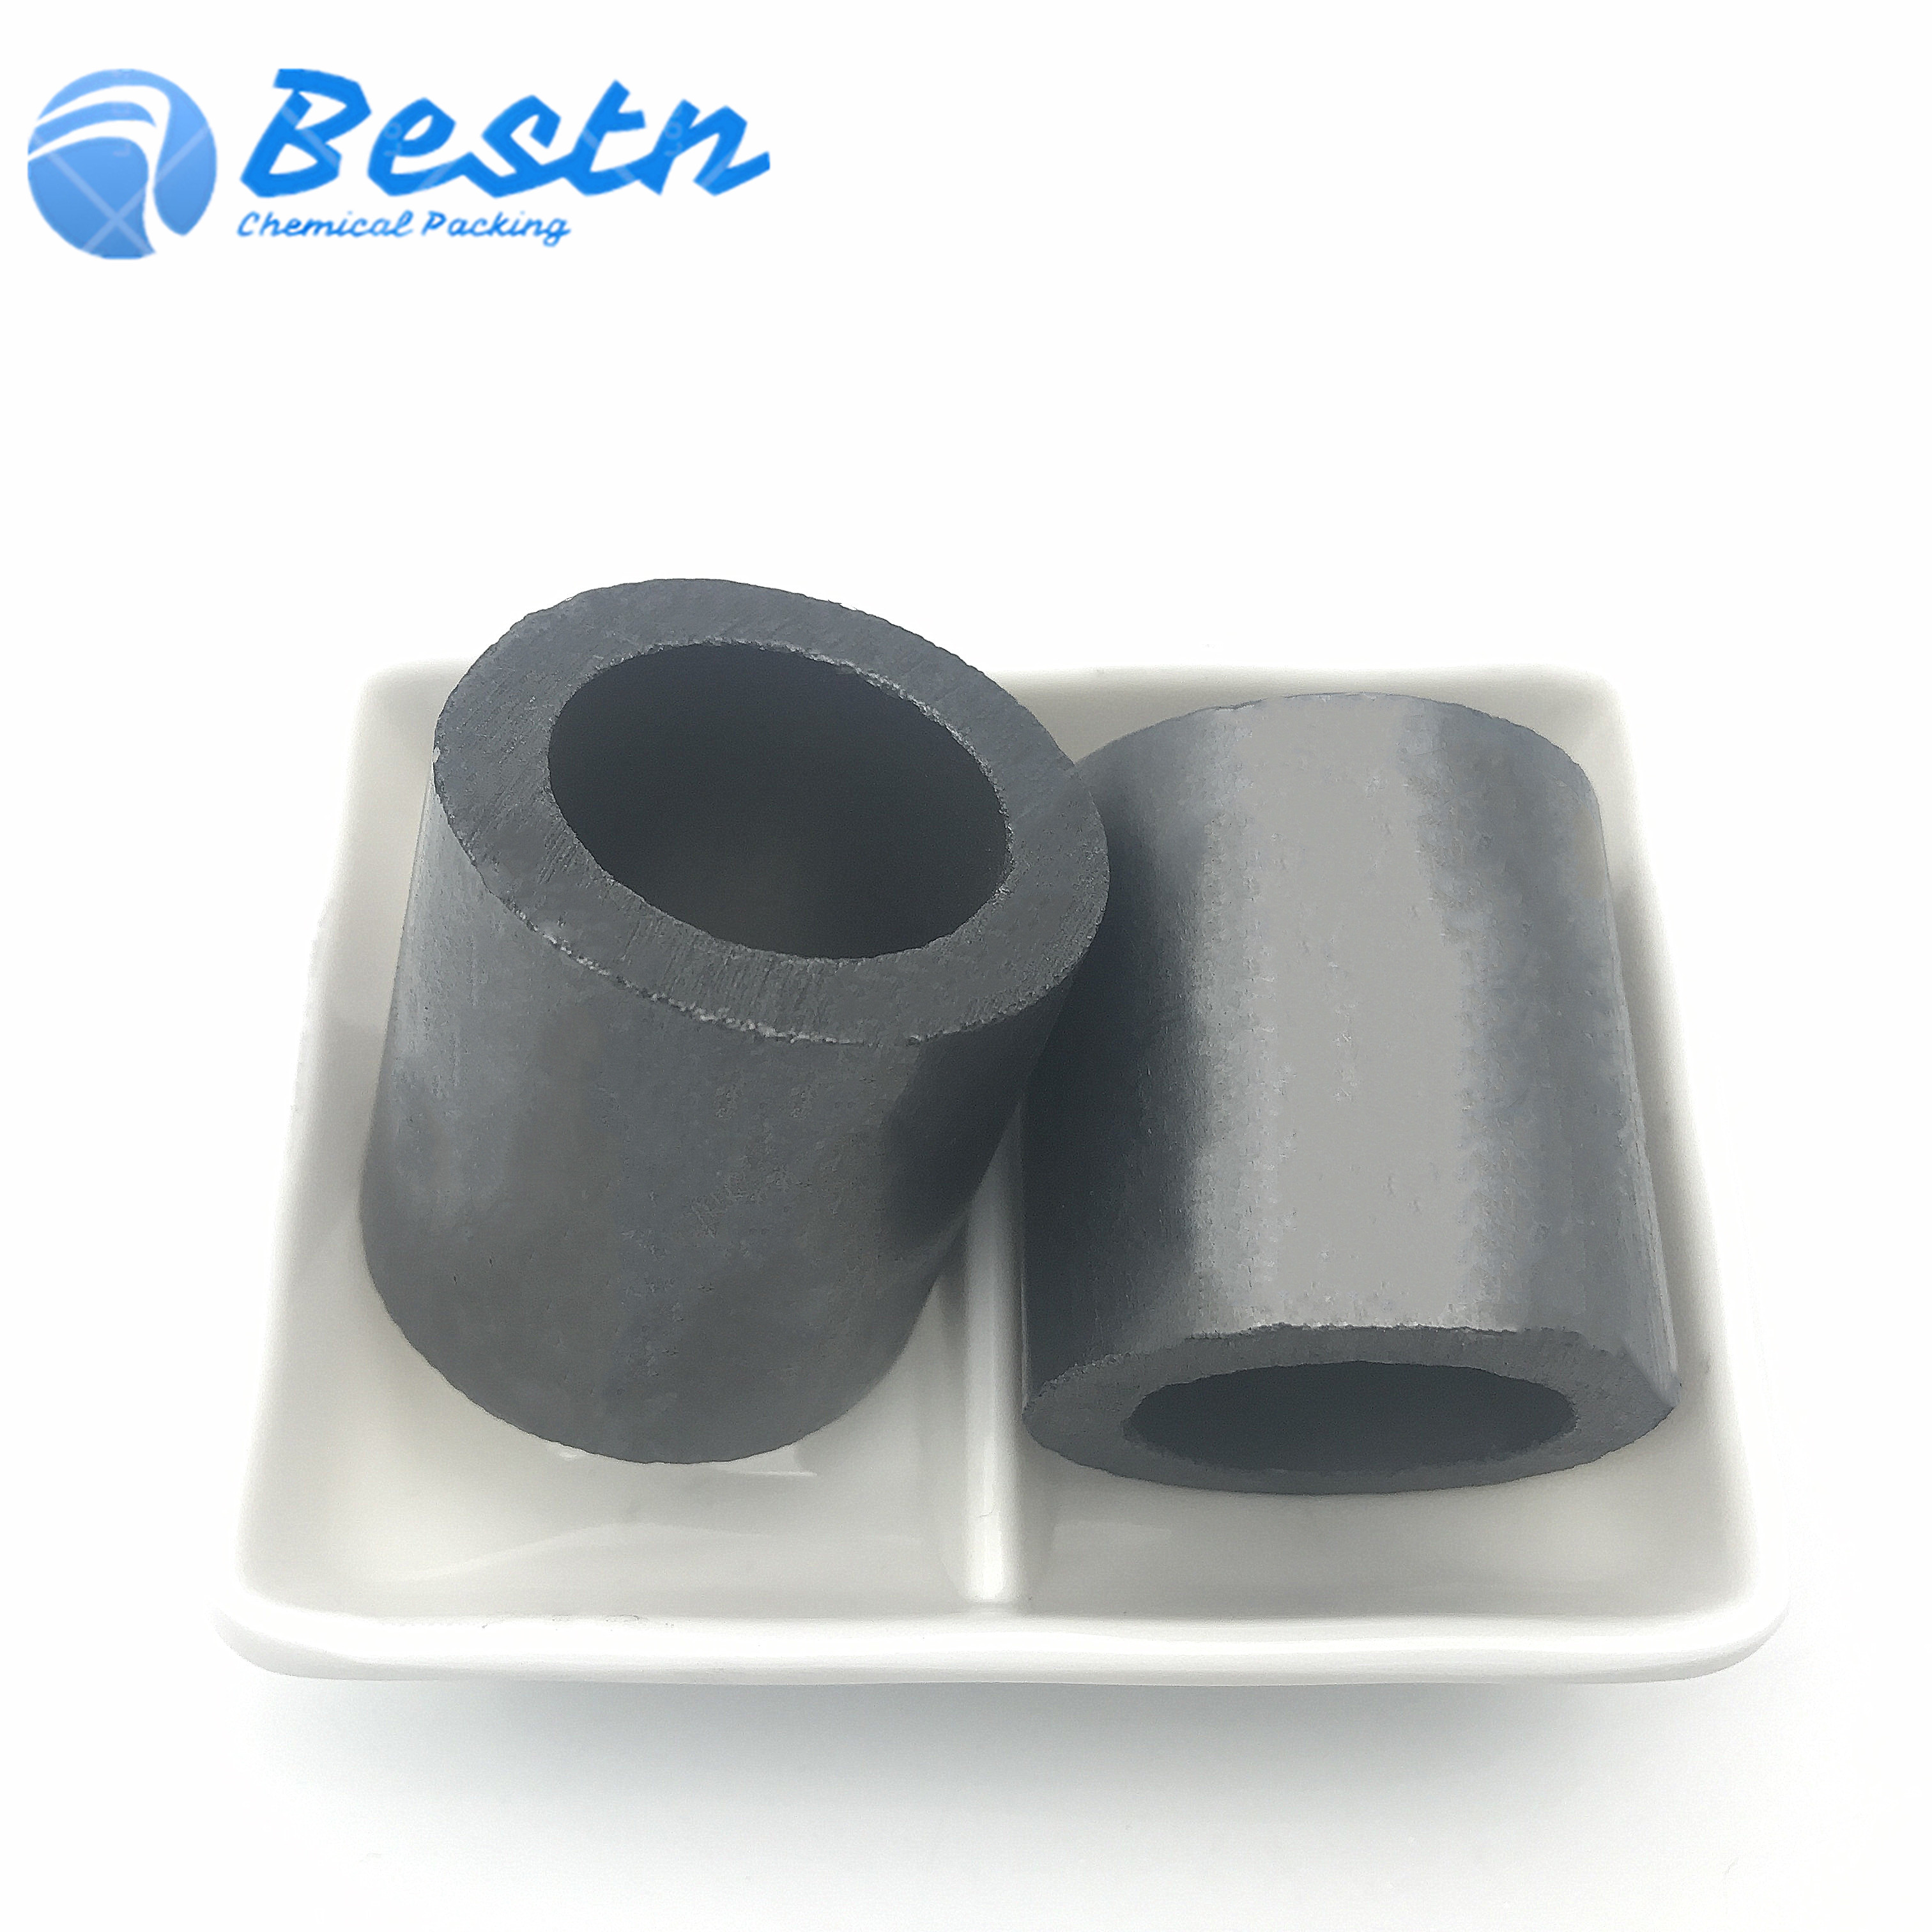 Ceramic Raschig Ring Factory | China Ceramic Raschig Ring Manufacturers,  Suppliers